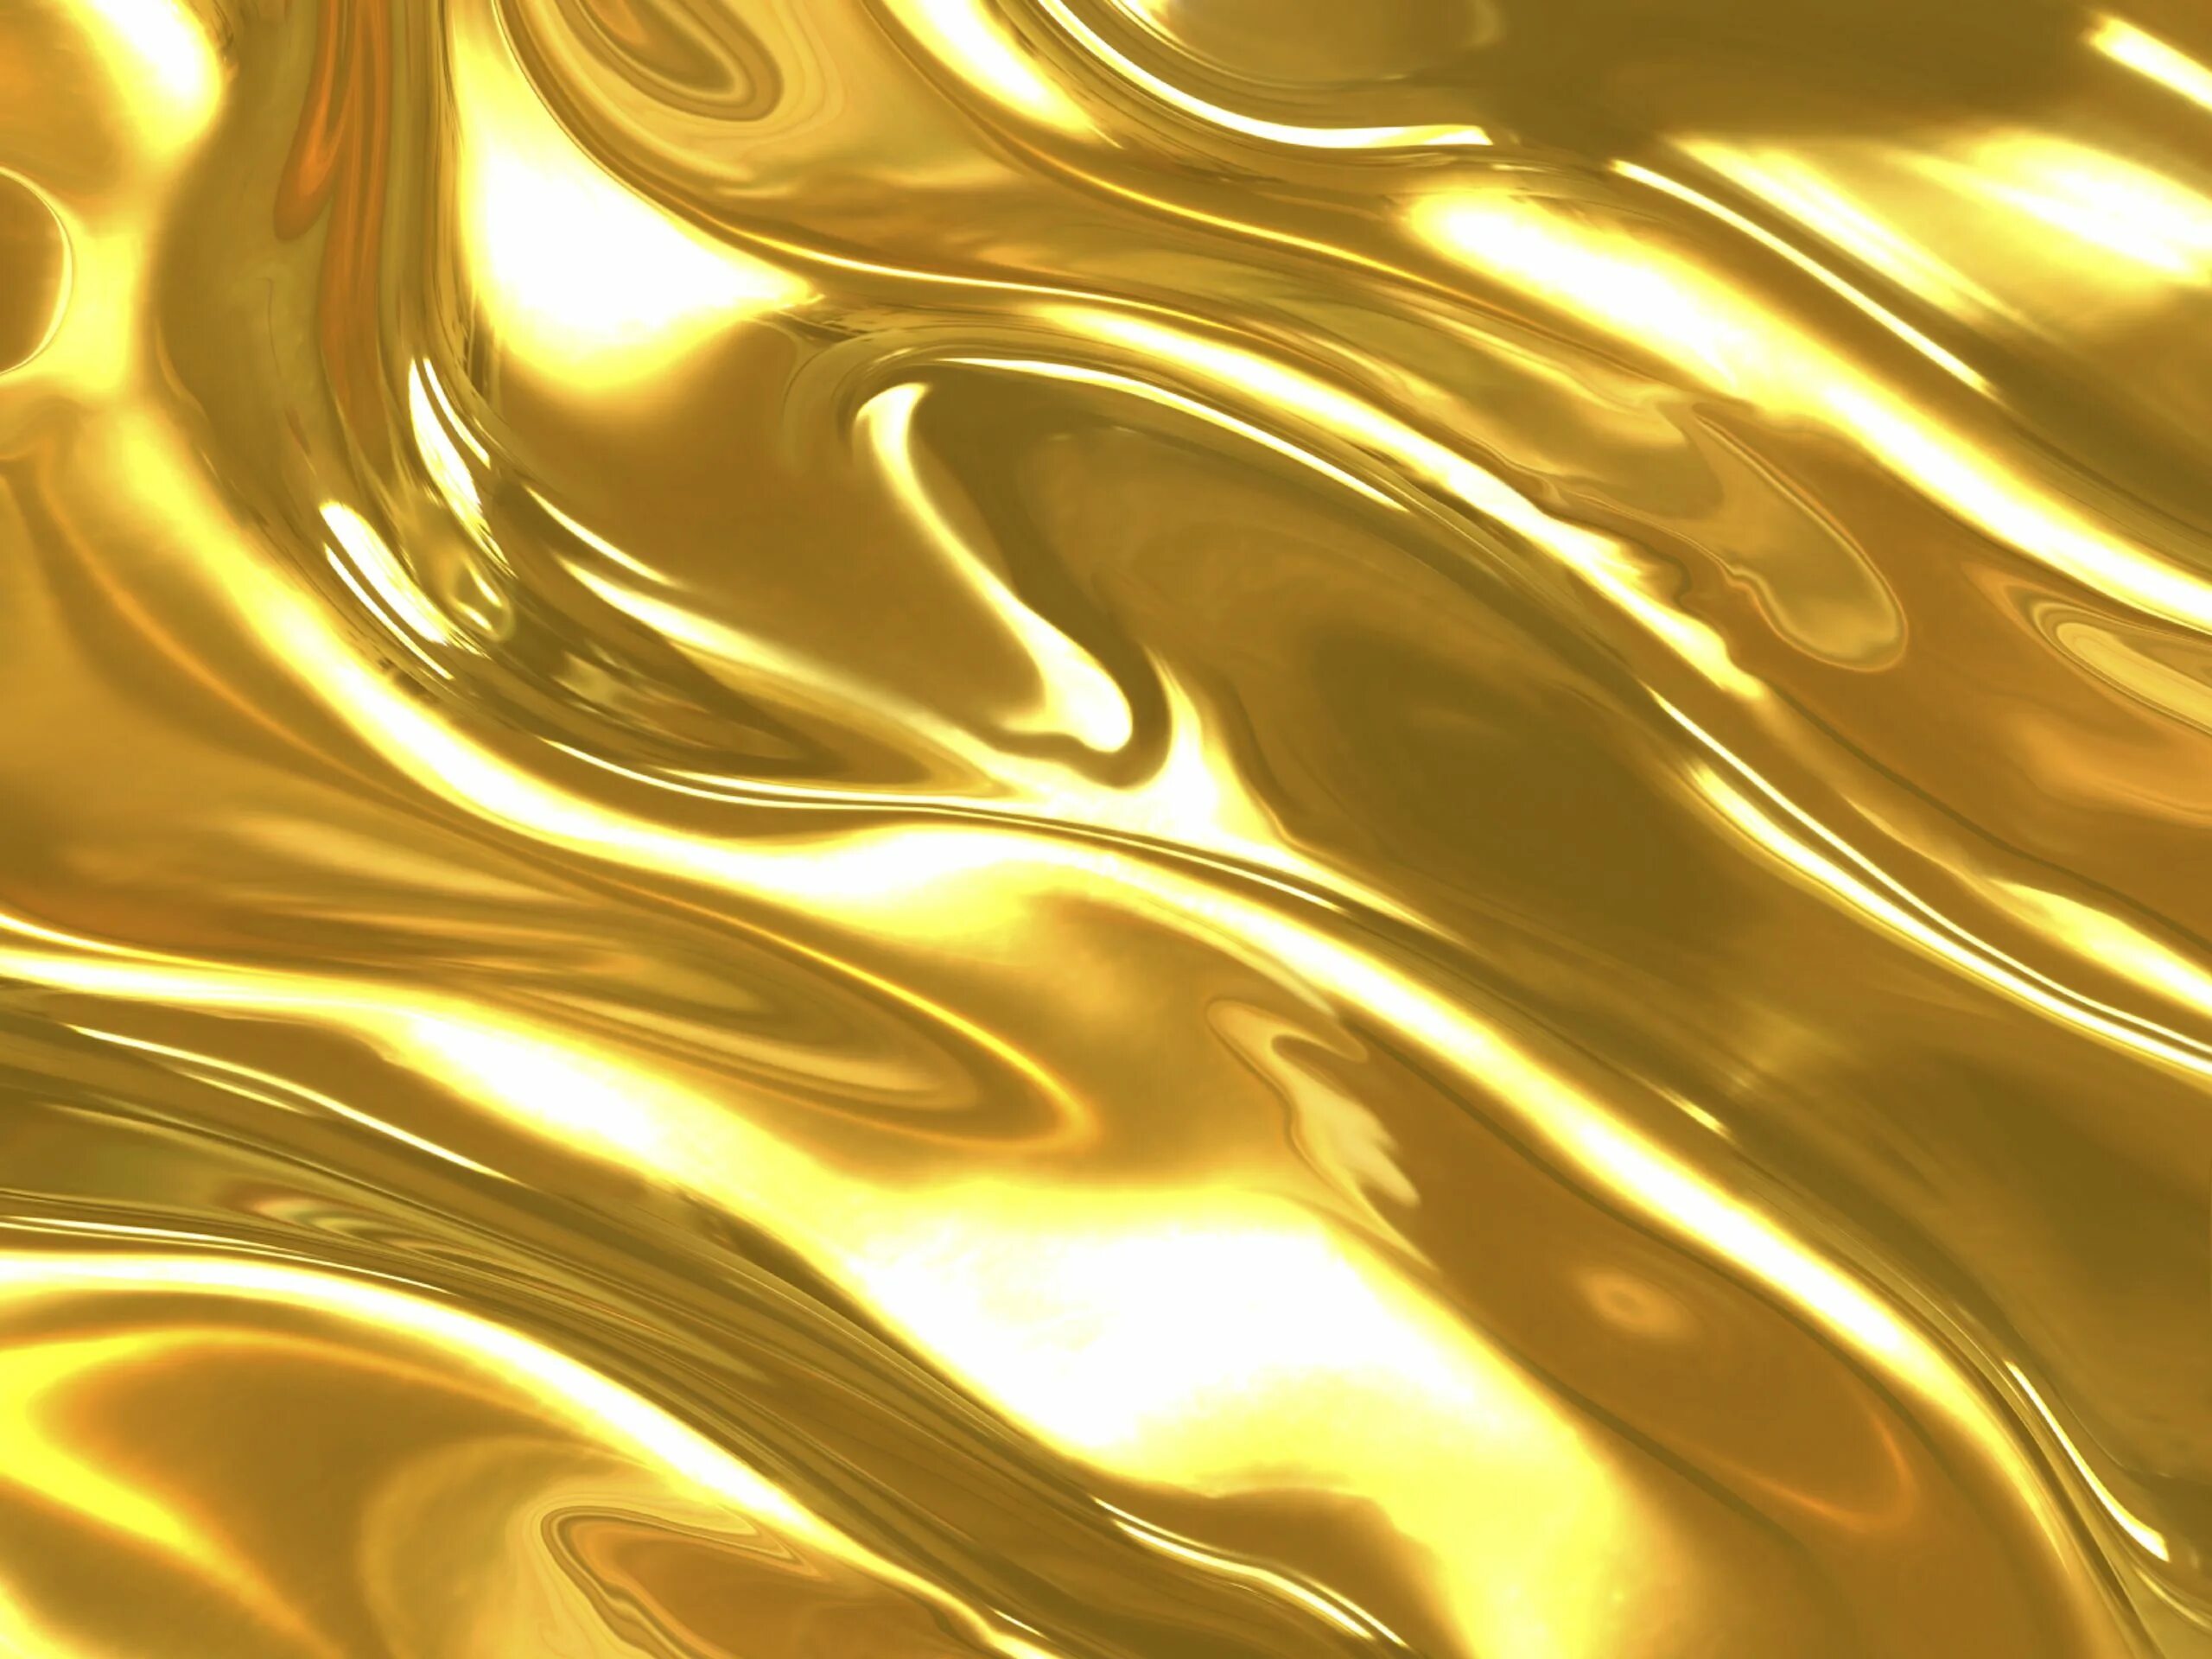 Вода металлический блеск. Золото металлик lx19240. Золотистый фон. Золото текстура. Золото цвет.